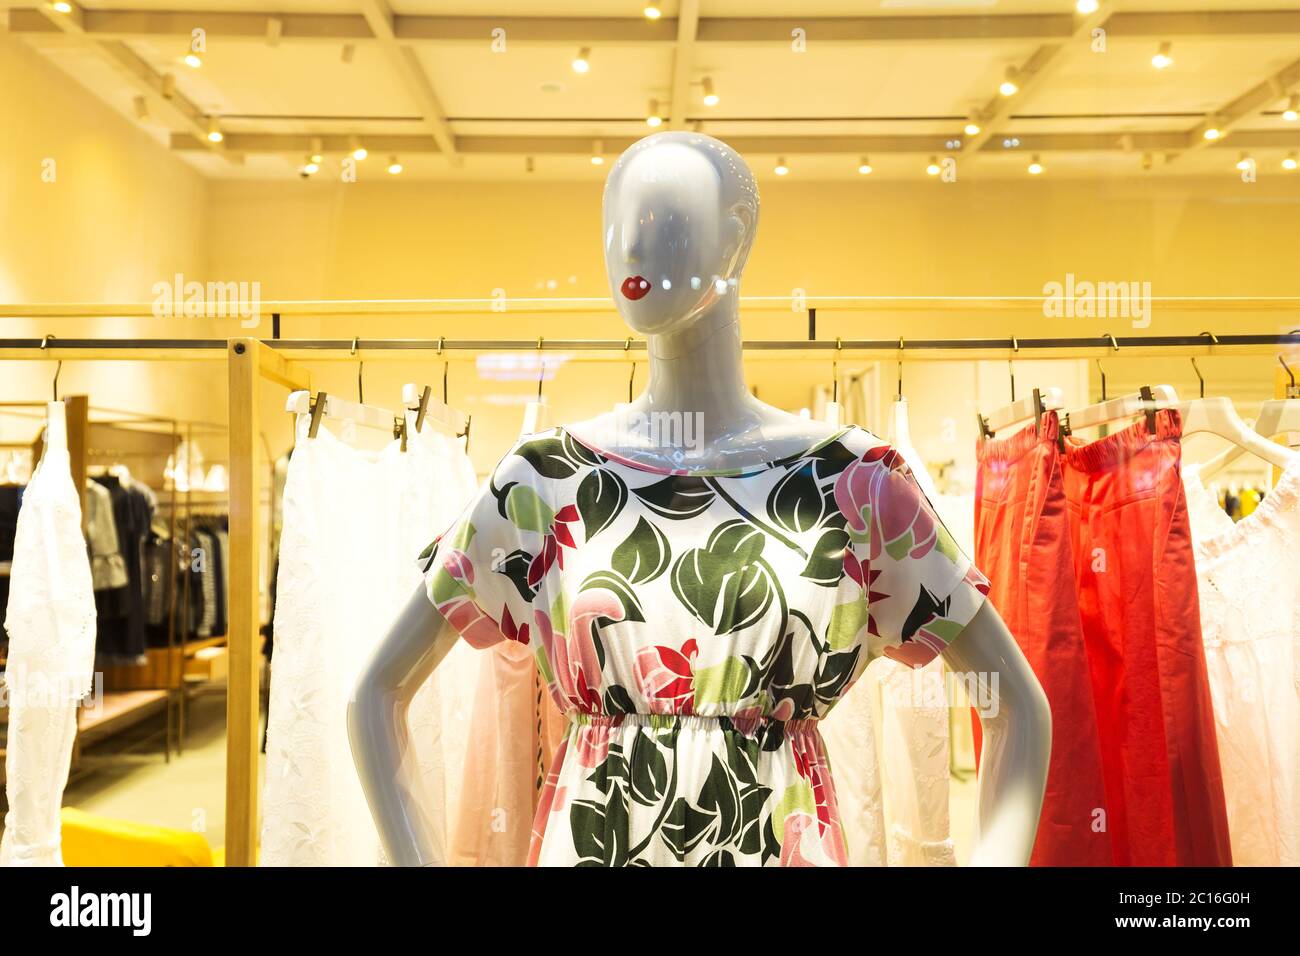 Clothing Store Fashion Shop Boutique Women Clothes Stock Image - Image of  mannequins, dress: 57579143